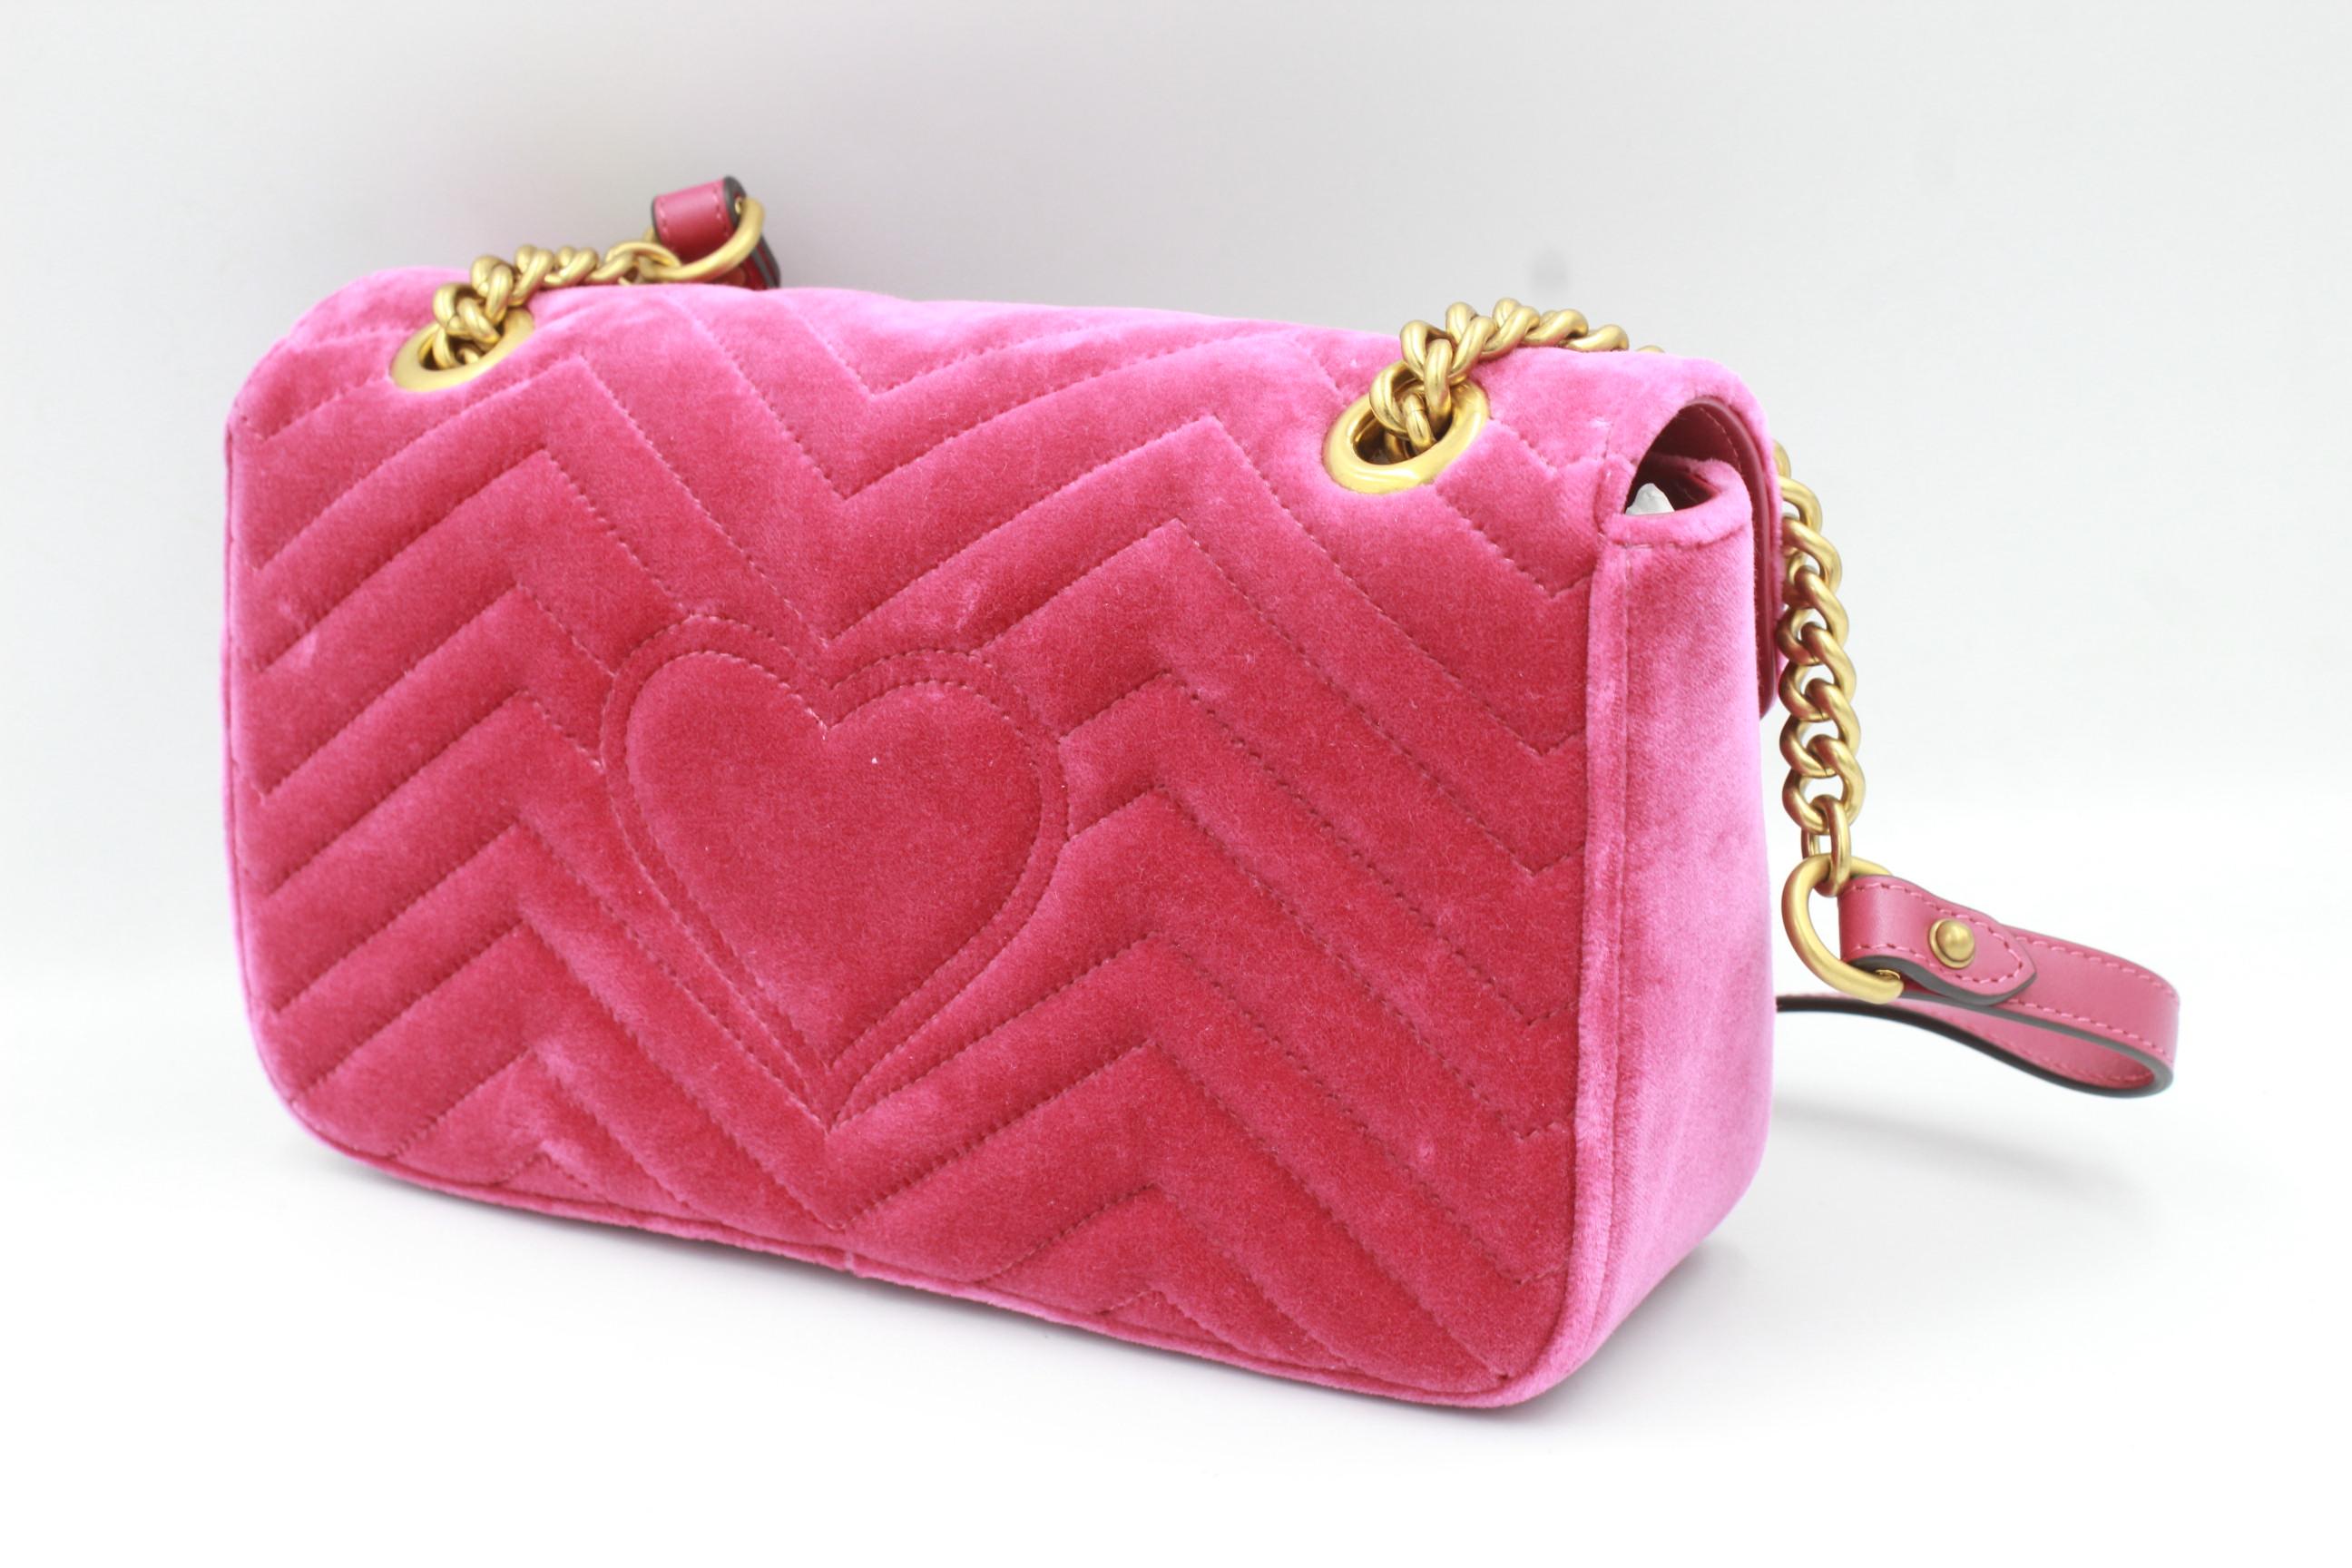 Gucci Marmont GG handbag in pink velvet.
Good condition.
15cm x 26cm x 7cm